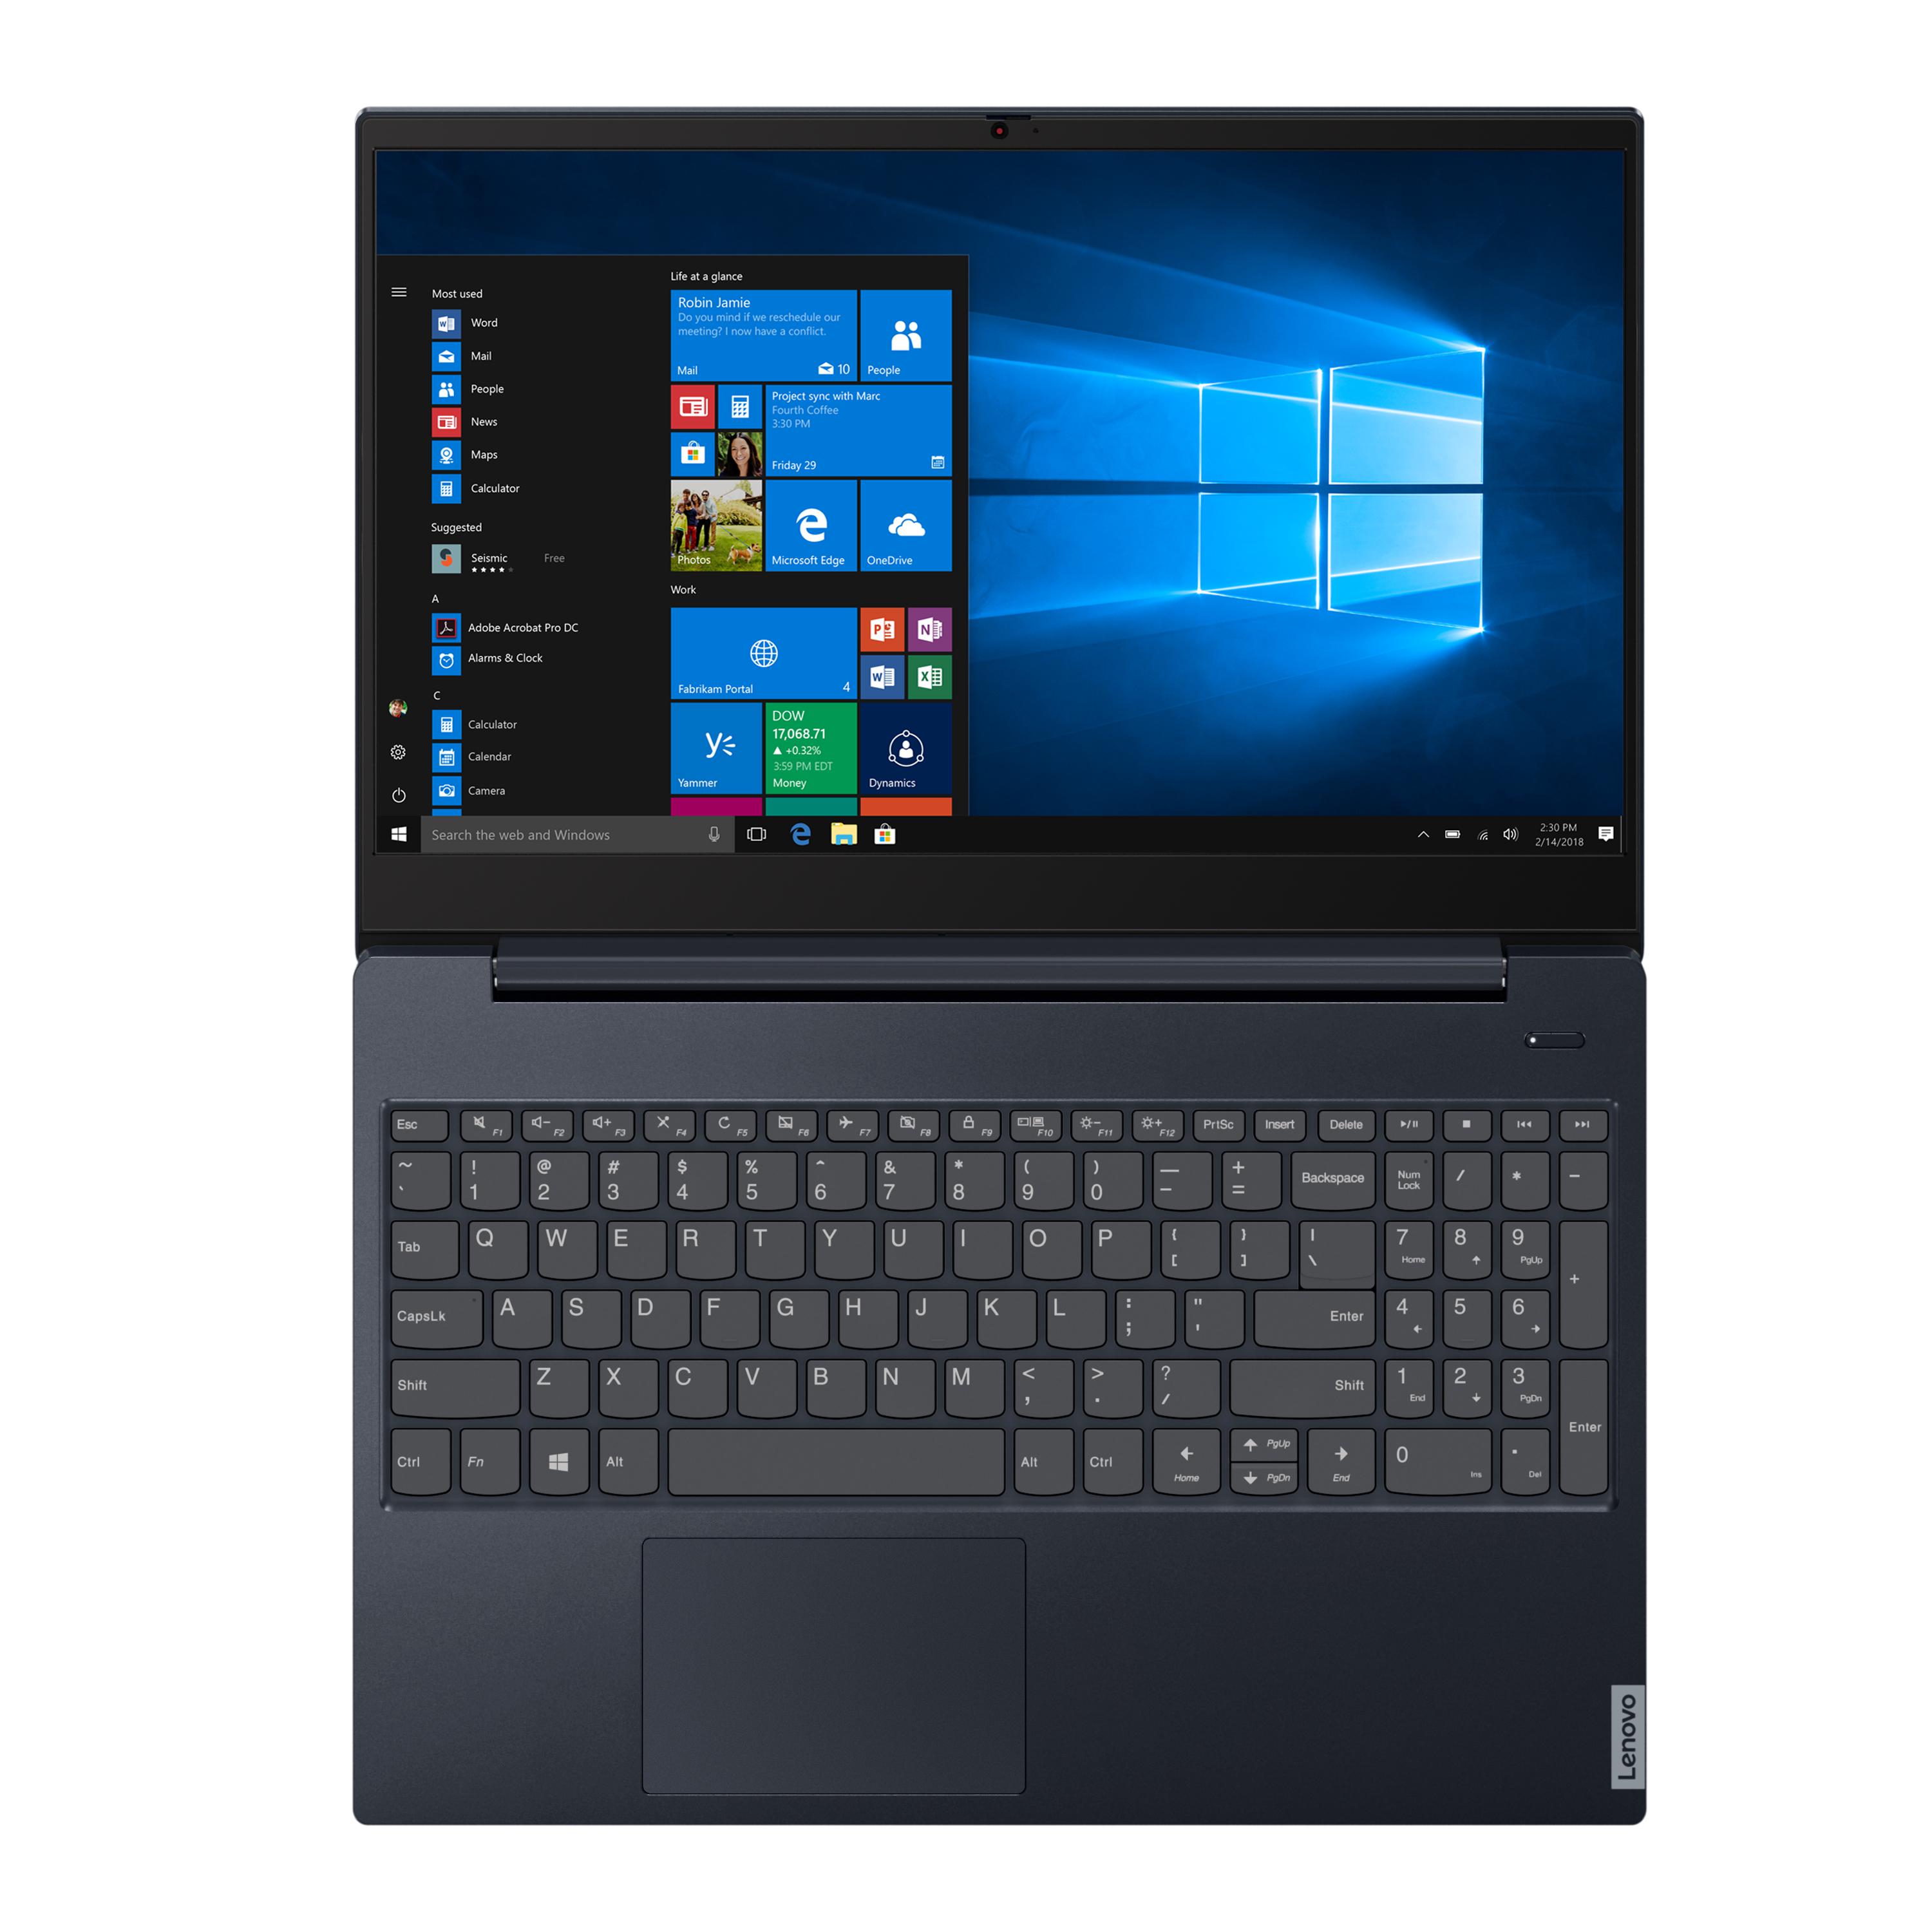 Lenovo ideapad S340 15.6" Laptop, Intel Core i5-8265U Quad-Core Processor, 8GB Memory, 128GB Solid State Drive, Windows 10 - Abyss Blue - 81N800H2US - image 3 of 3